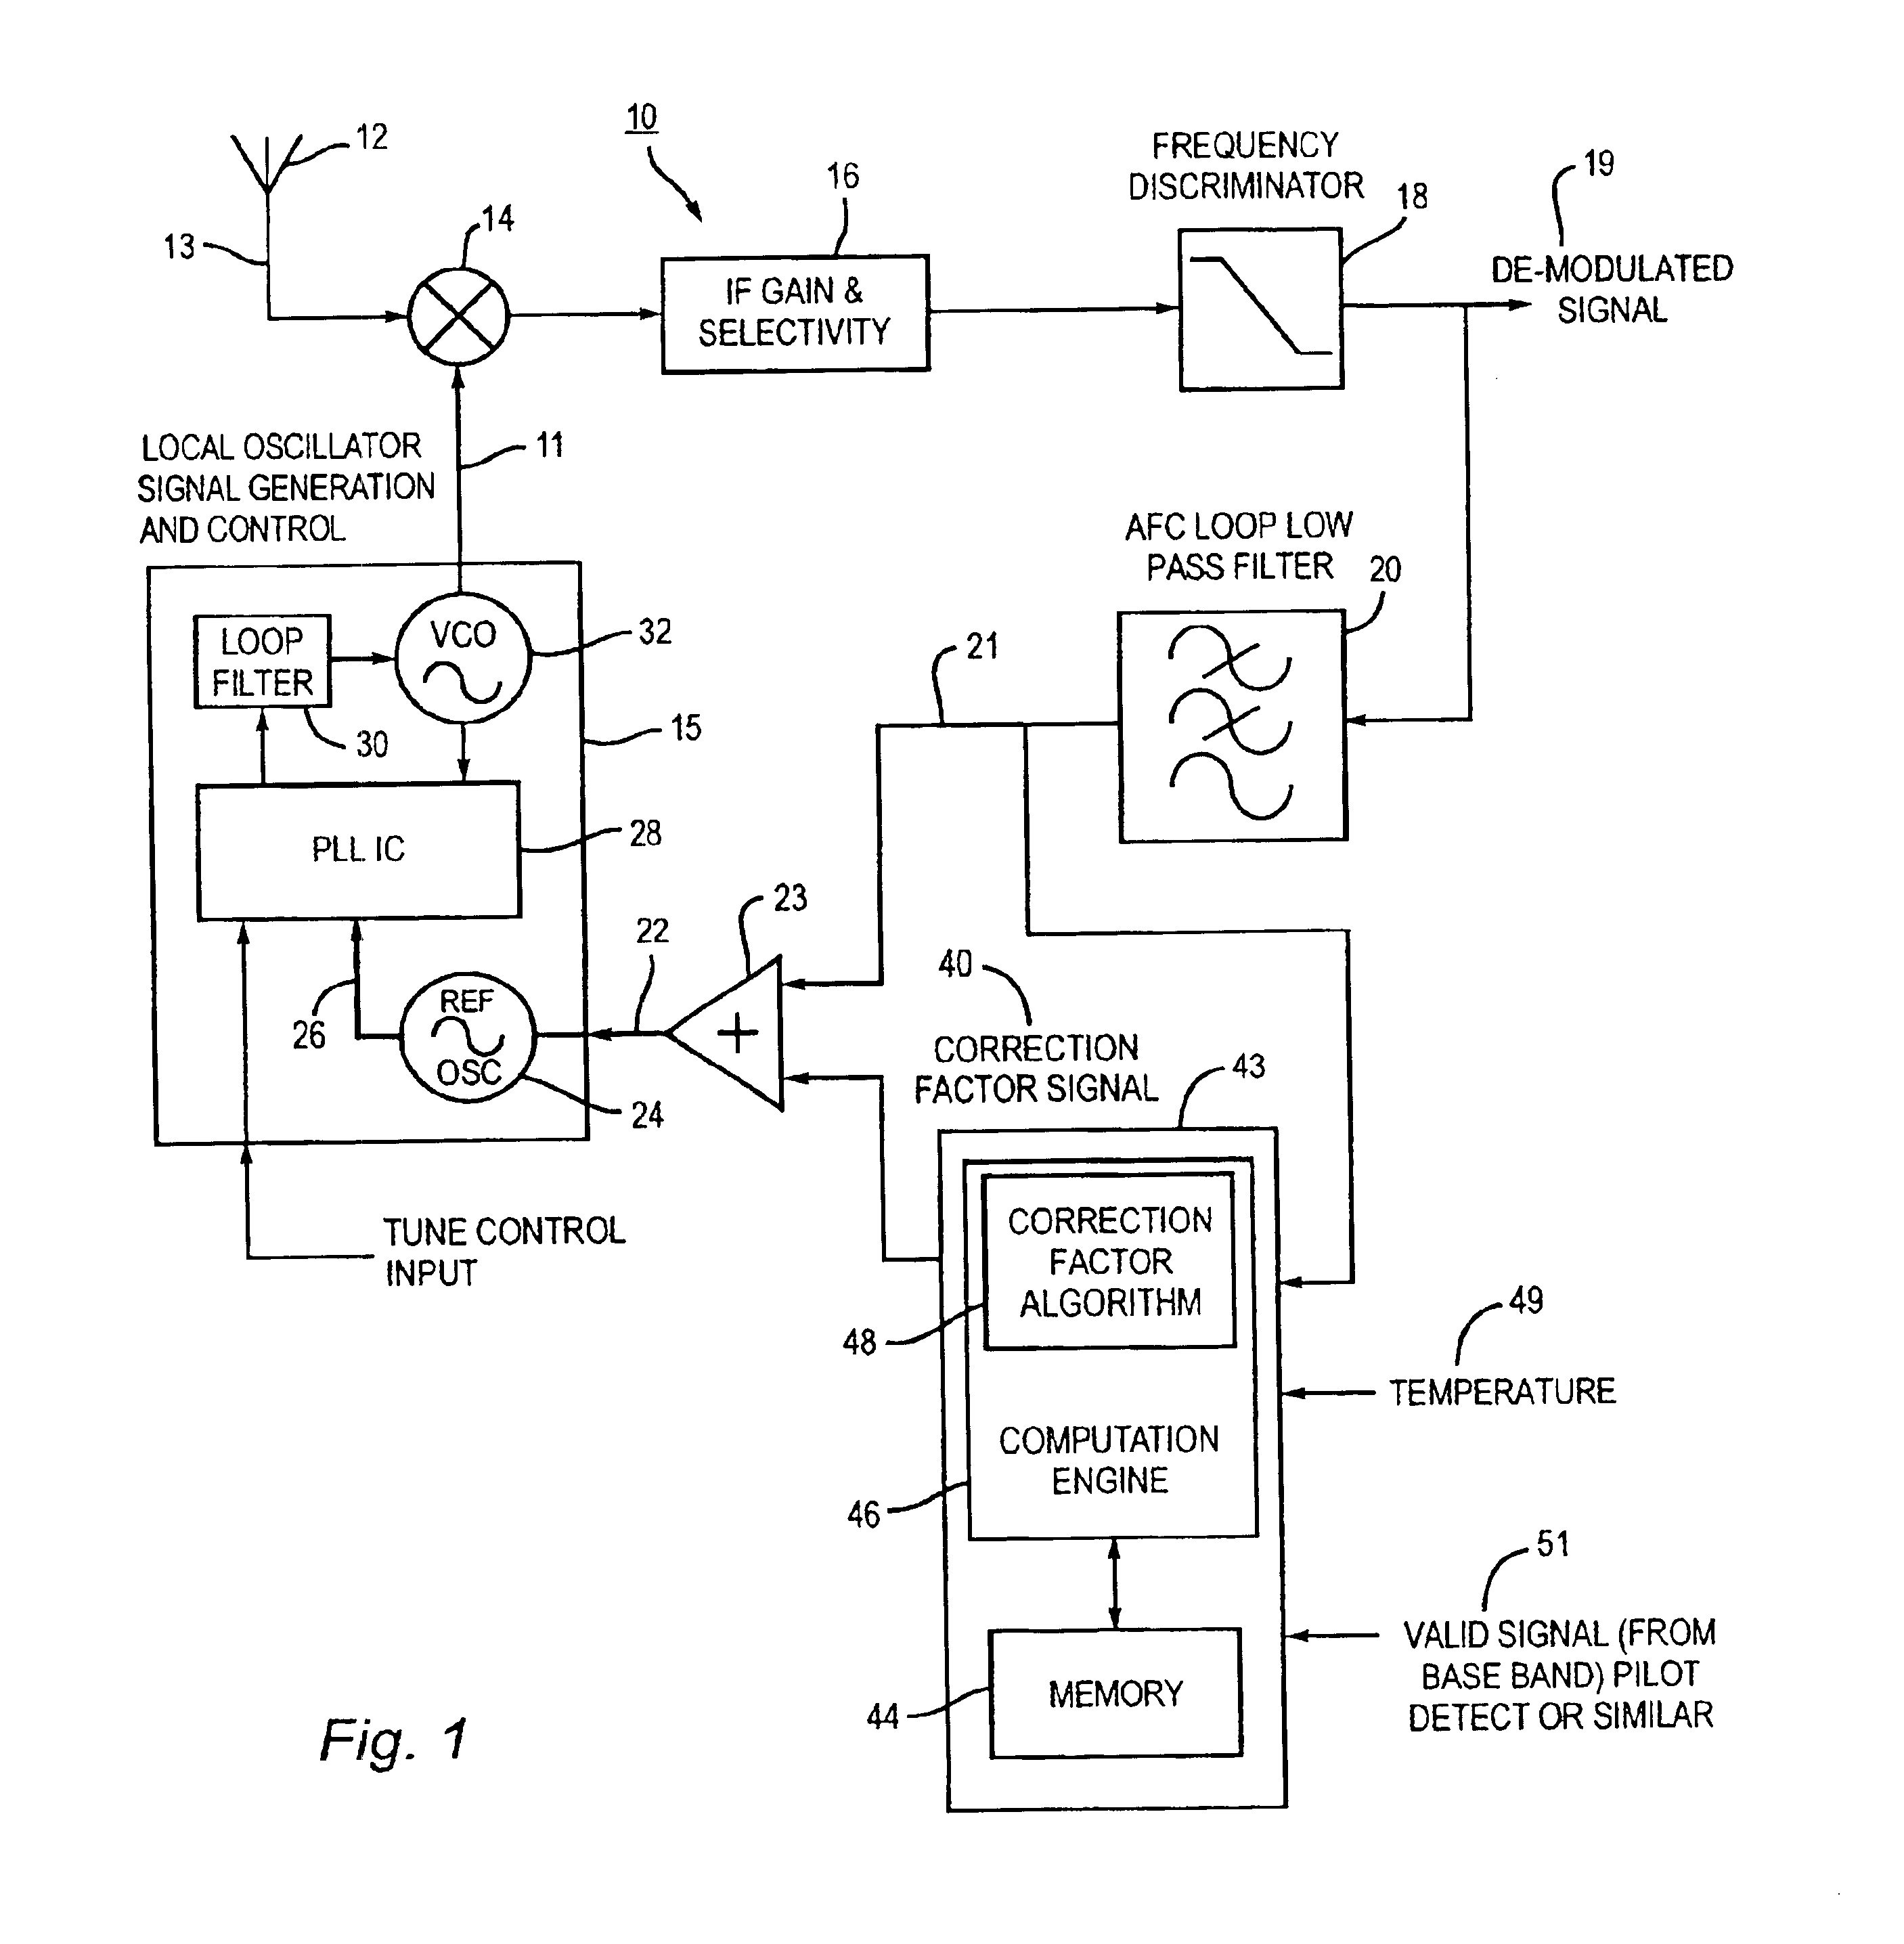 Reference oscillator